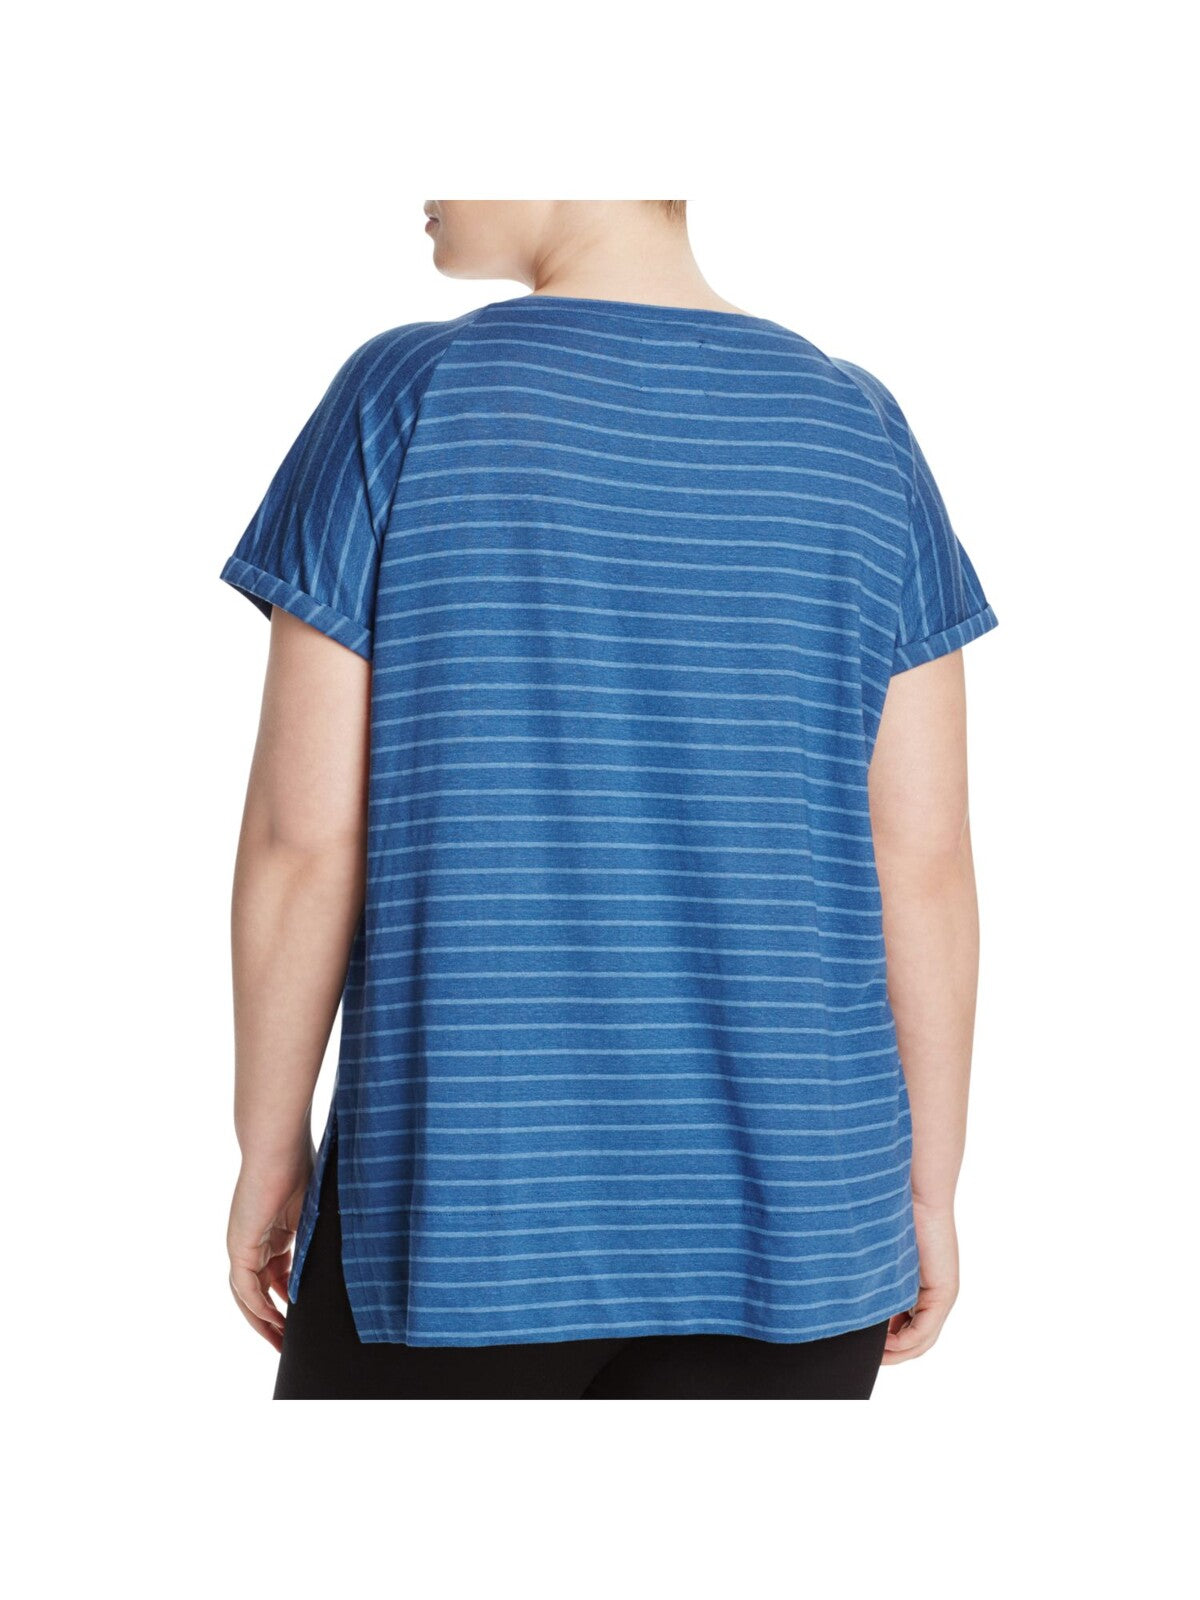 LYSSE Womens Blue Stretch Striped Short Sleeve Scoop Neck T-Shirt Plus 1X